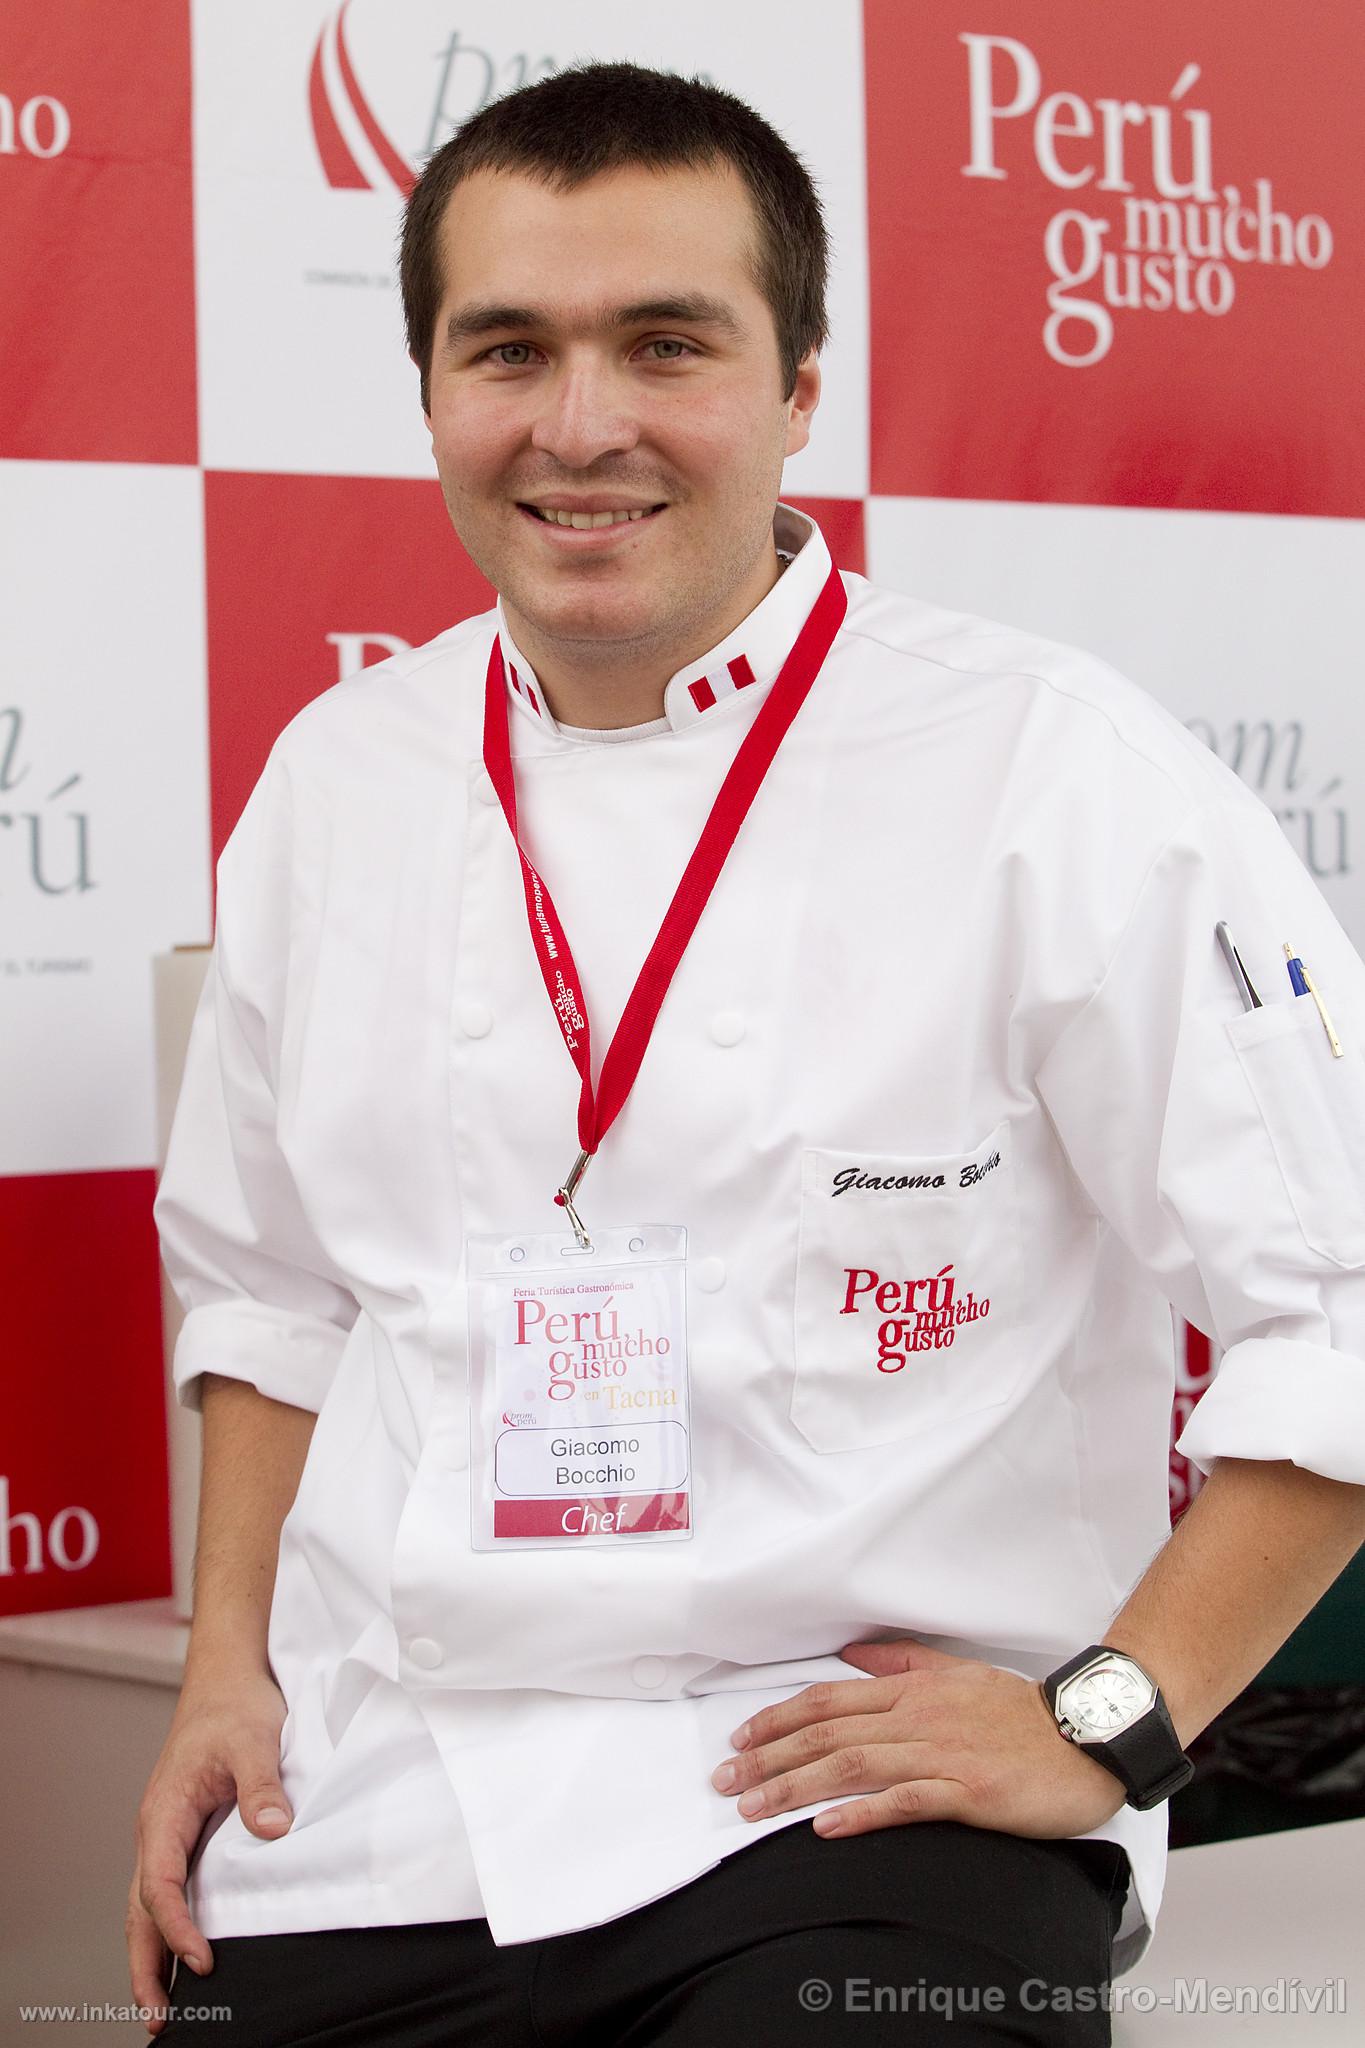 Chef Giacomo Bocchio